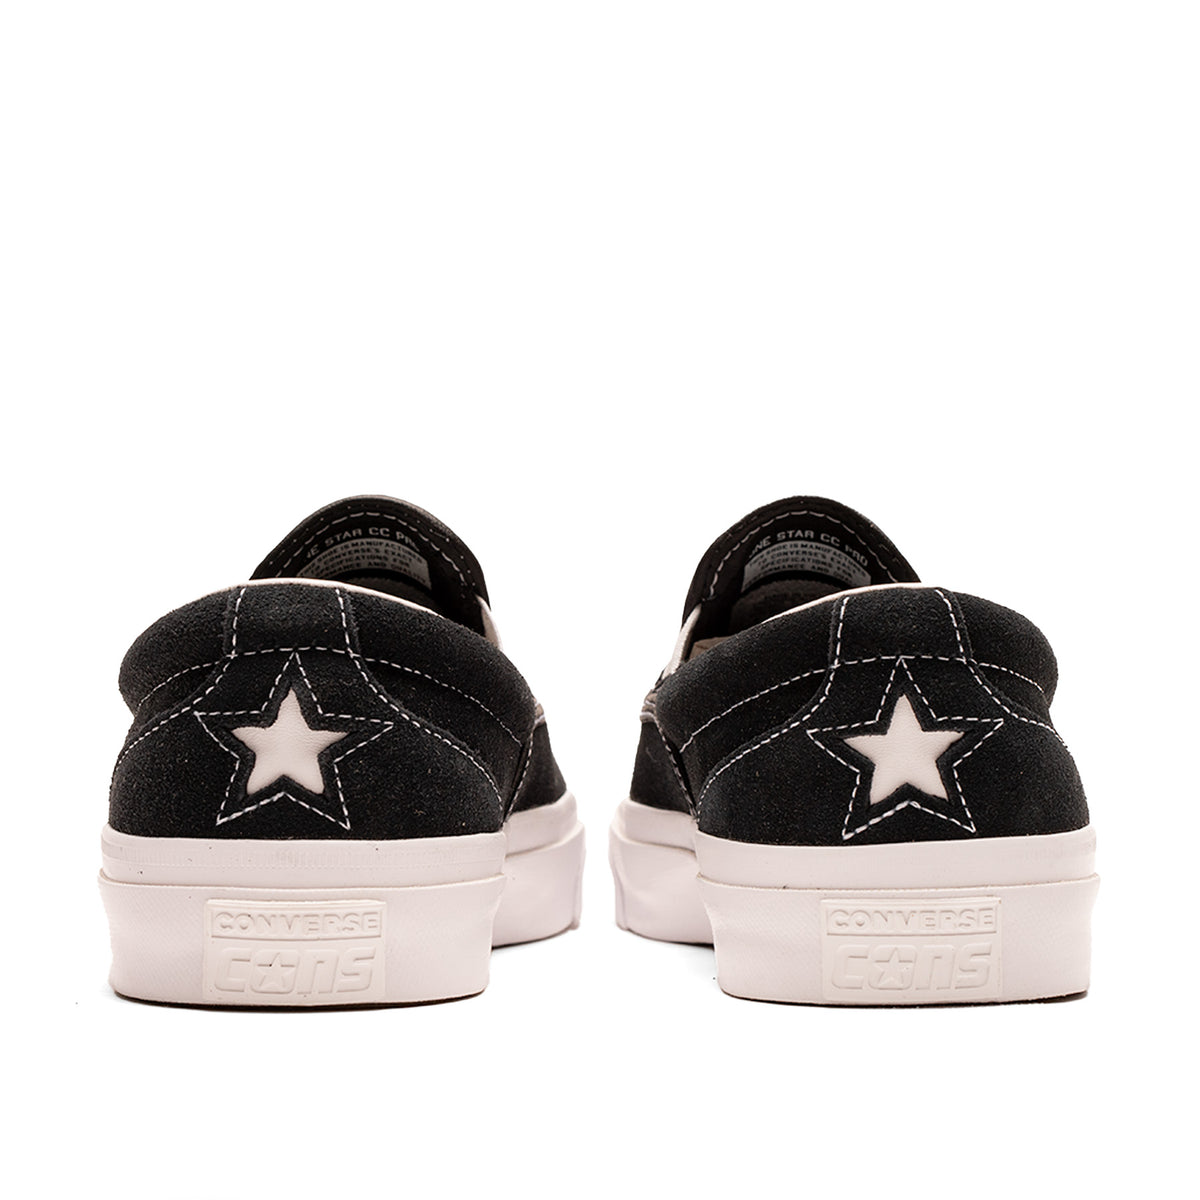 Converse One Star CC Slip Pro Black/White/White